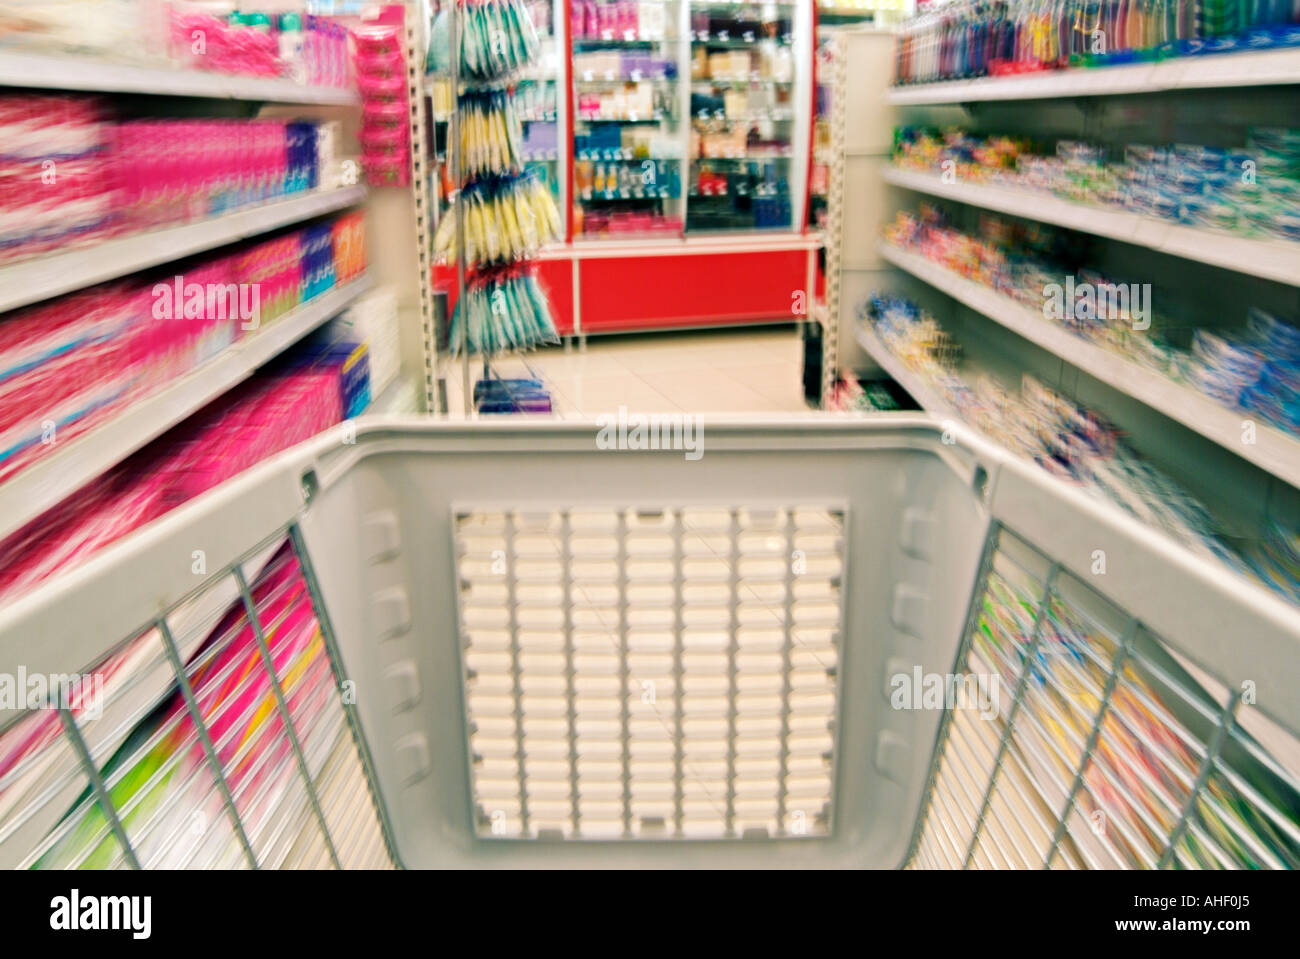 Shopping Trolley Rushing Through a Supermarket Aisle Stock Photo